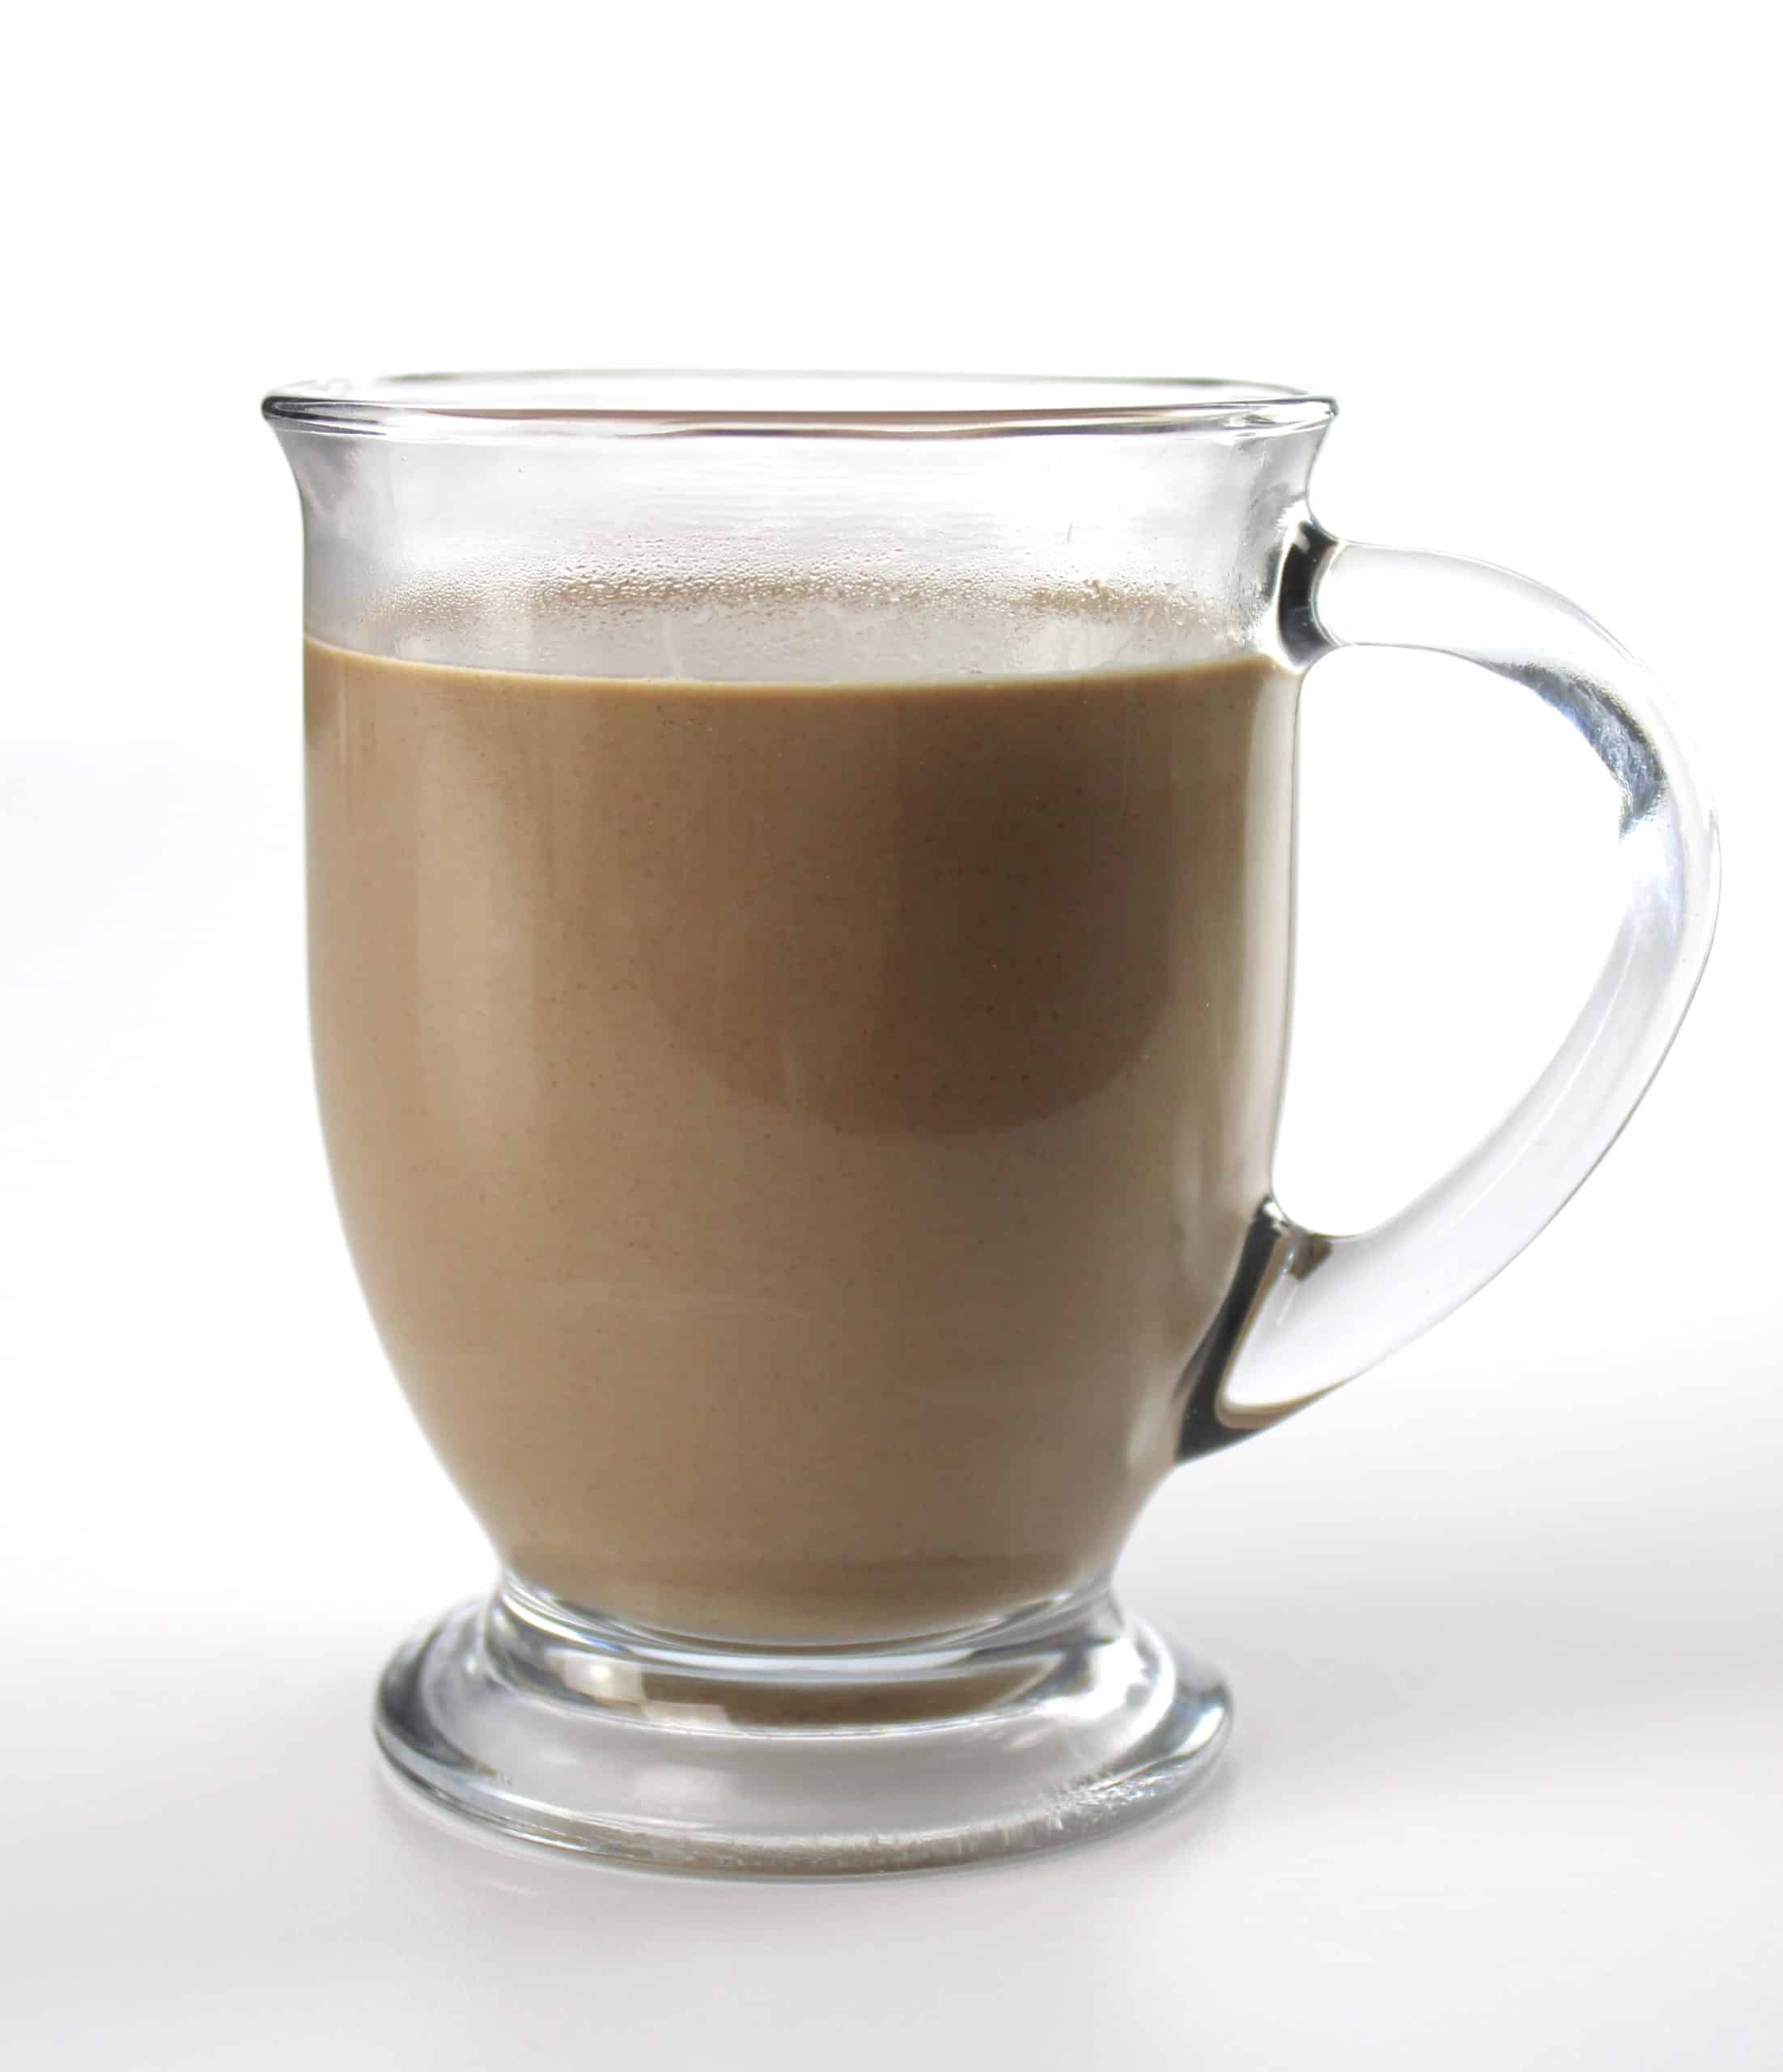 Keto Hot Chocolate in glass mug